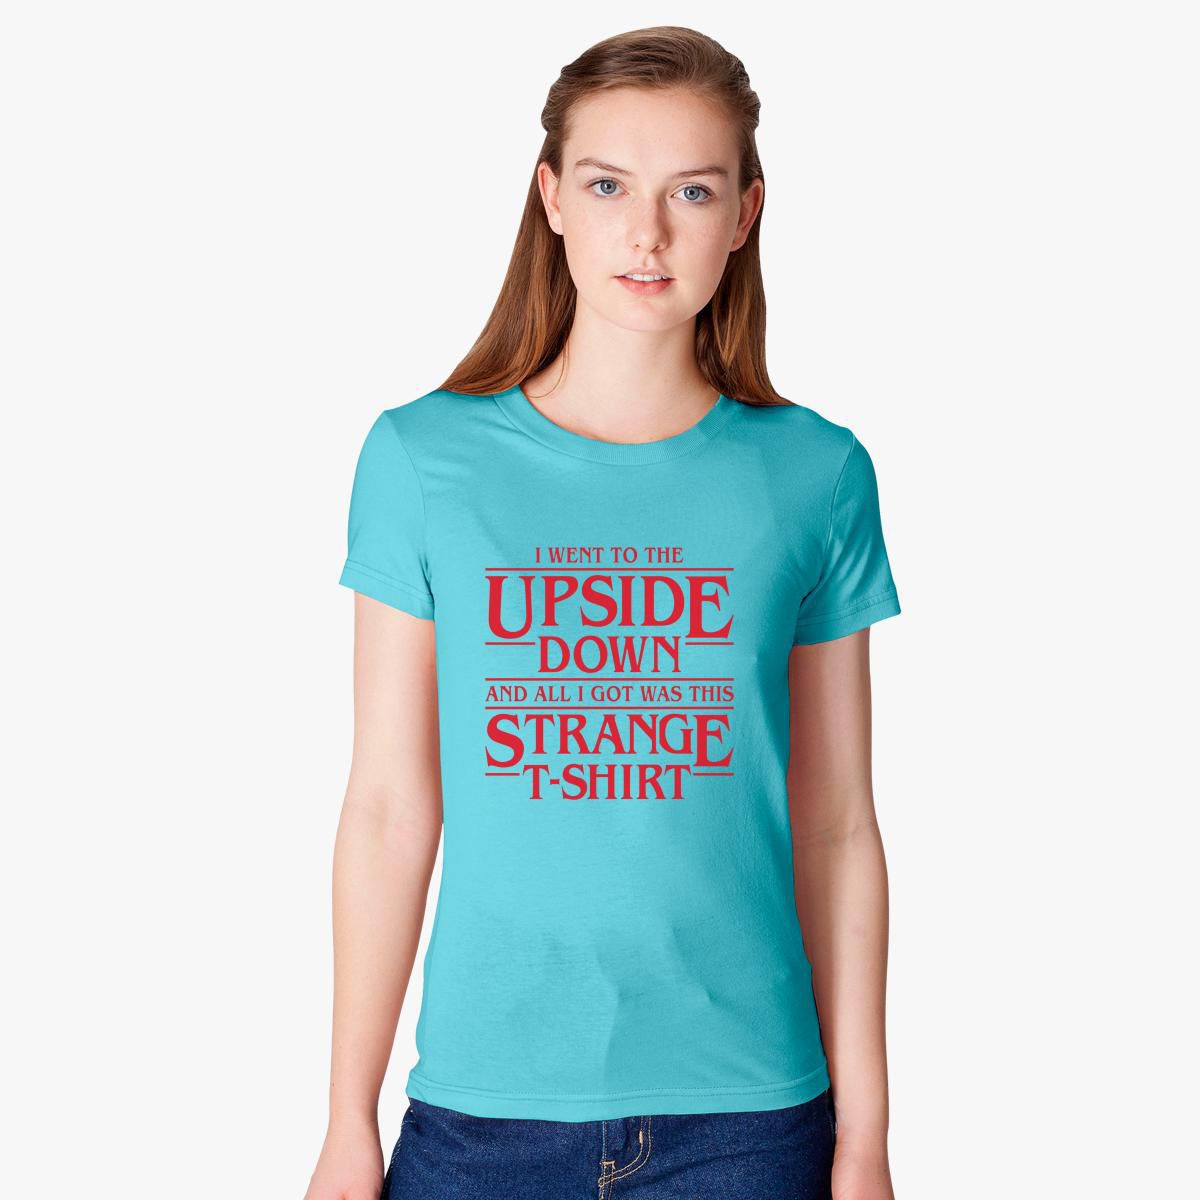 things upside down quote Women's T-shirt - Customon